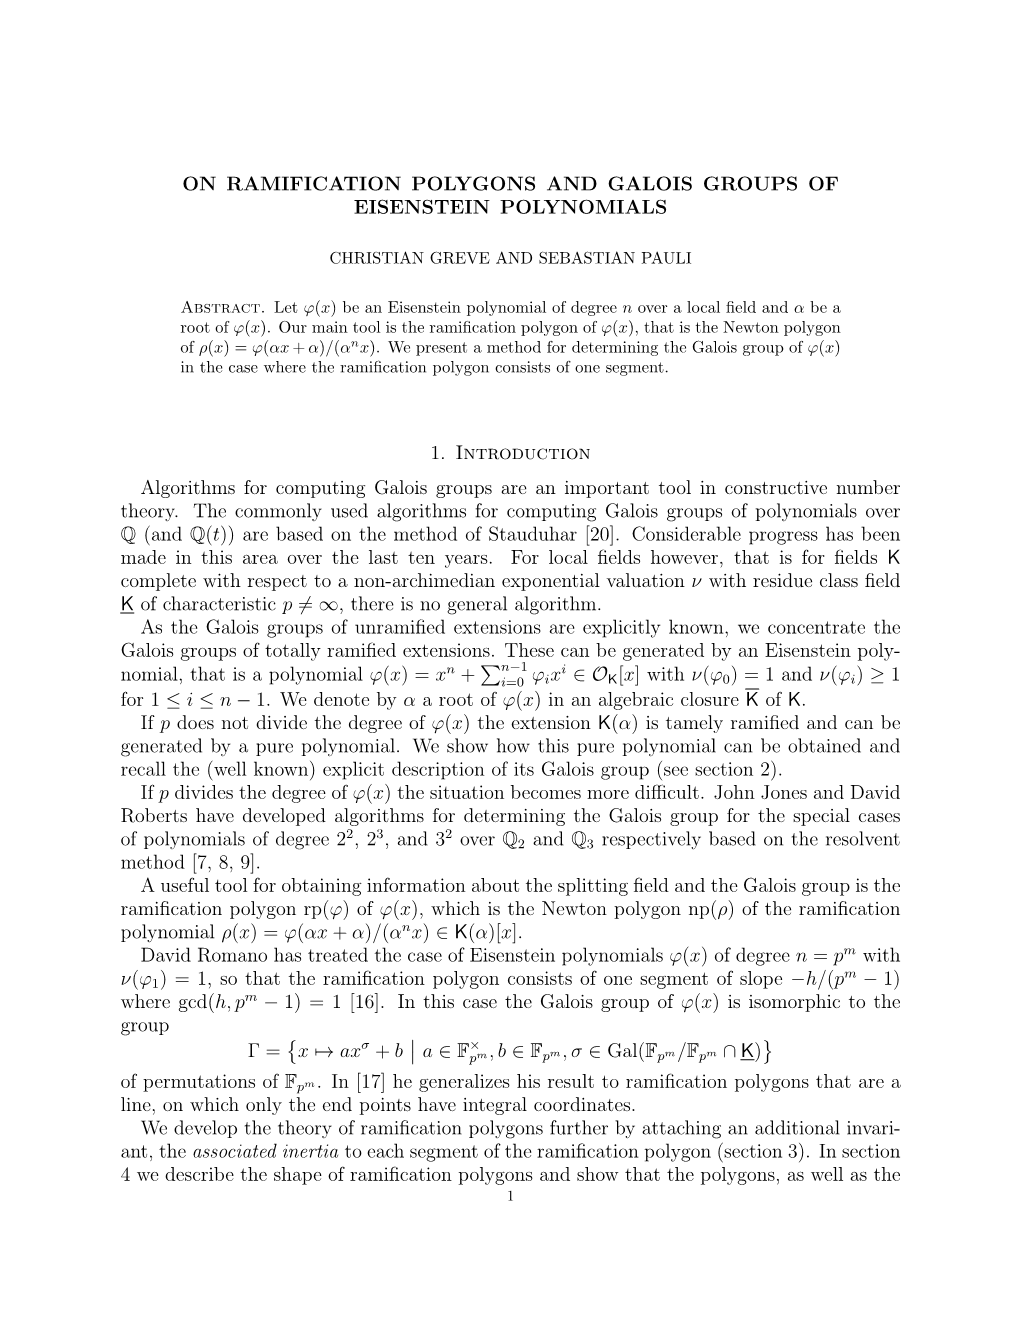 Galois Groups of Eisenstein Polynomials Whose Ramification